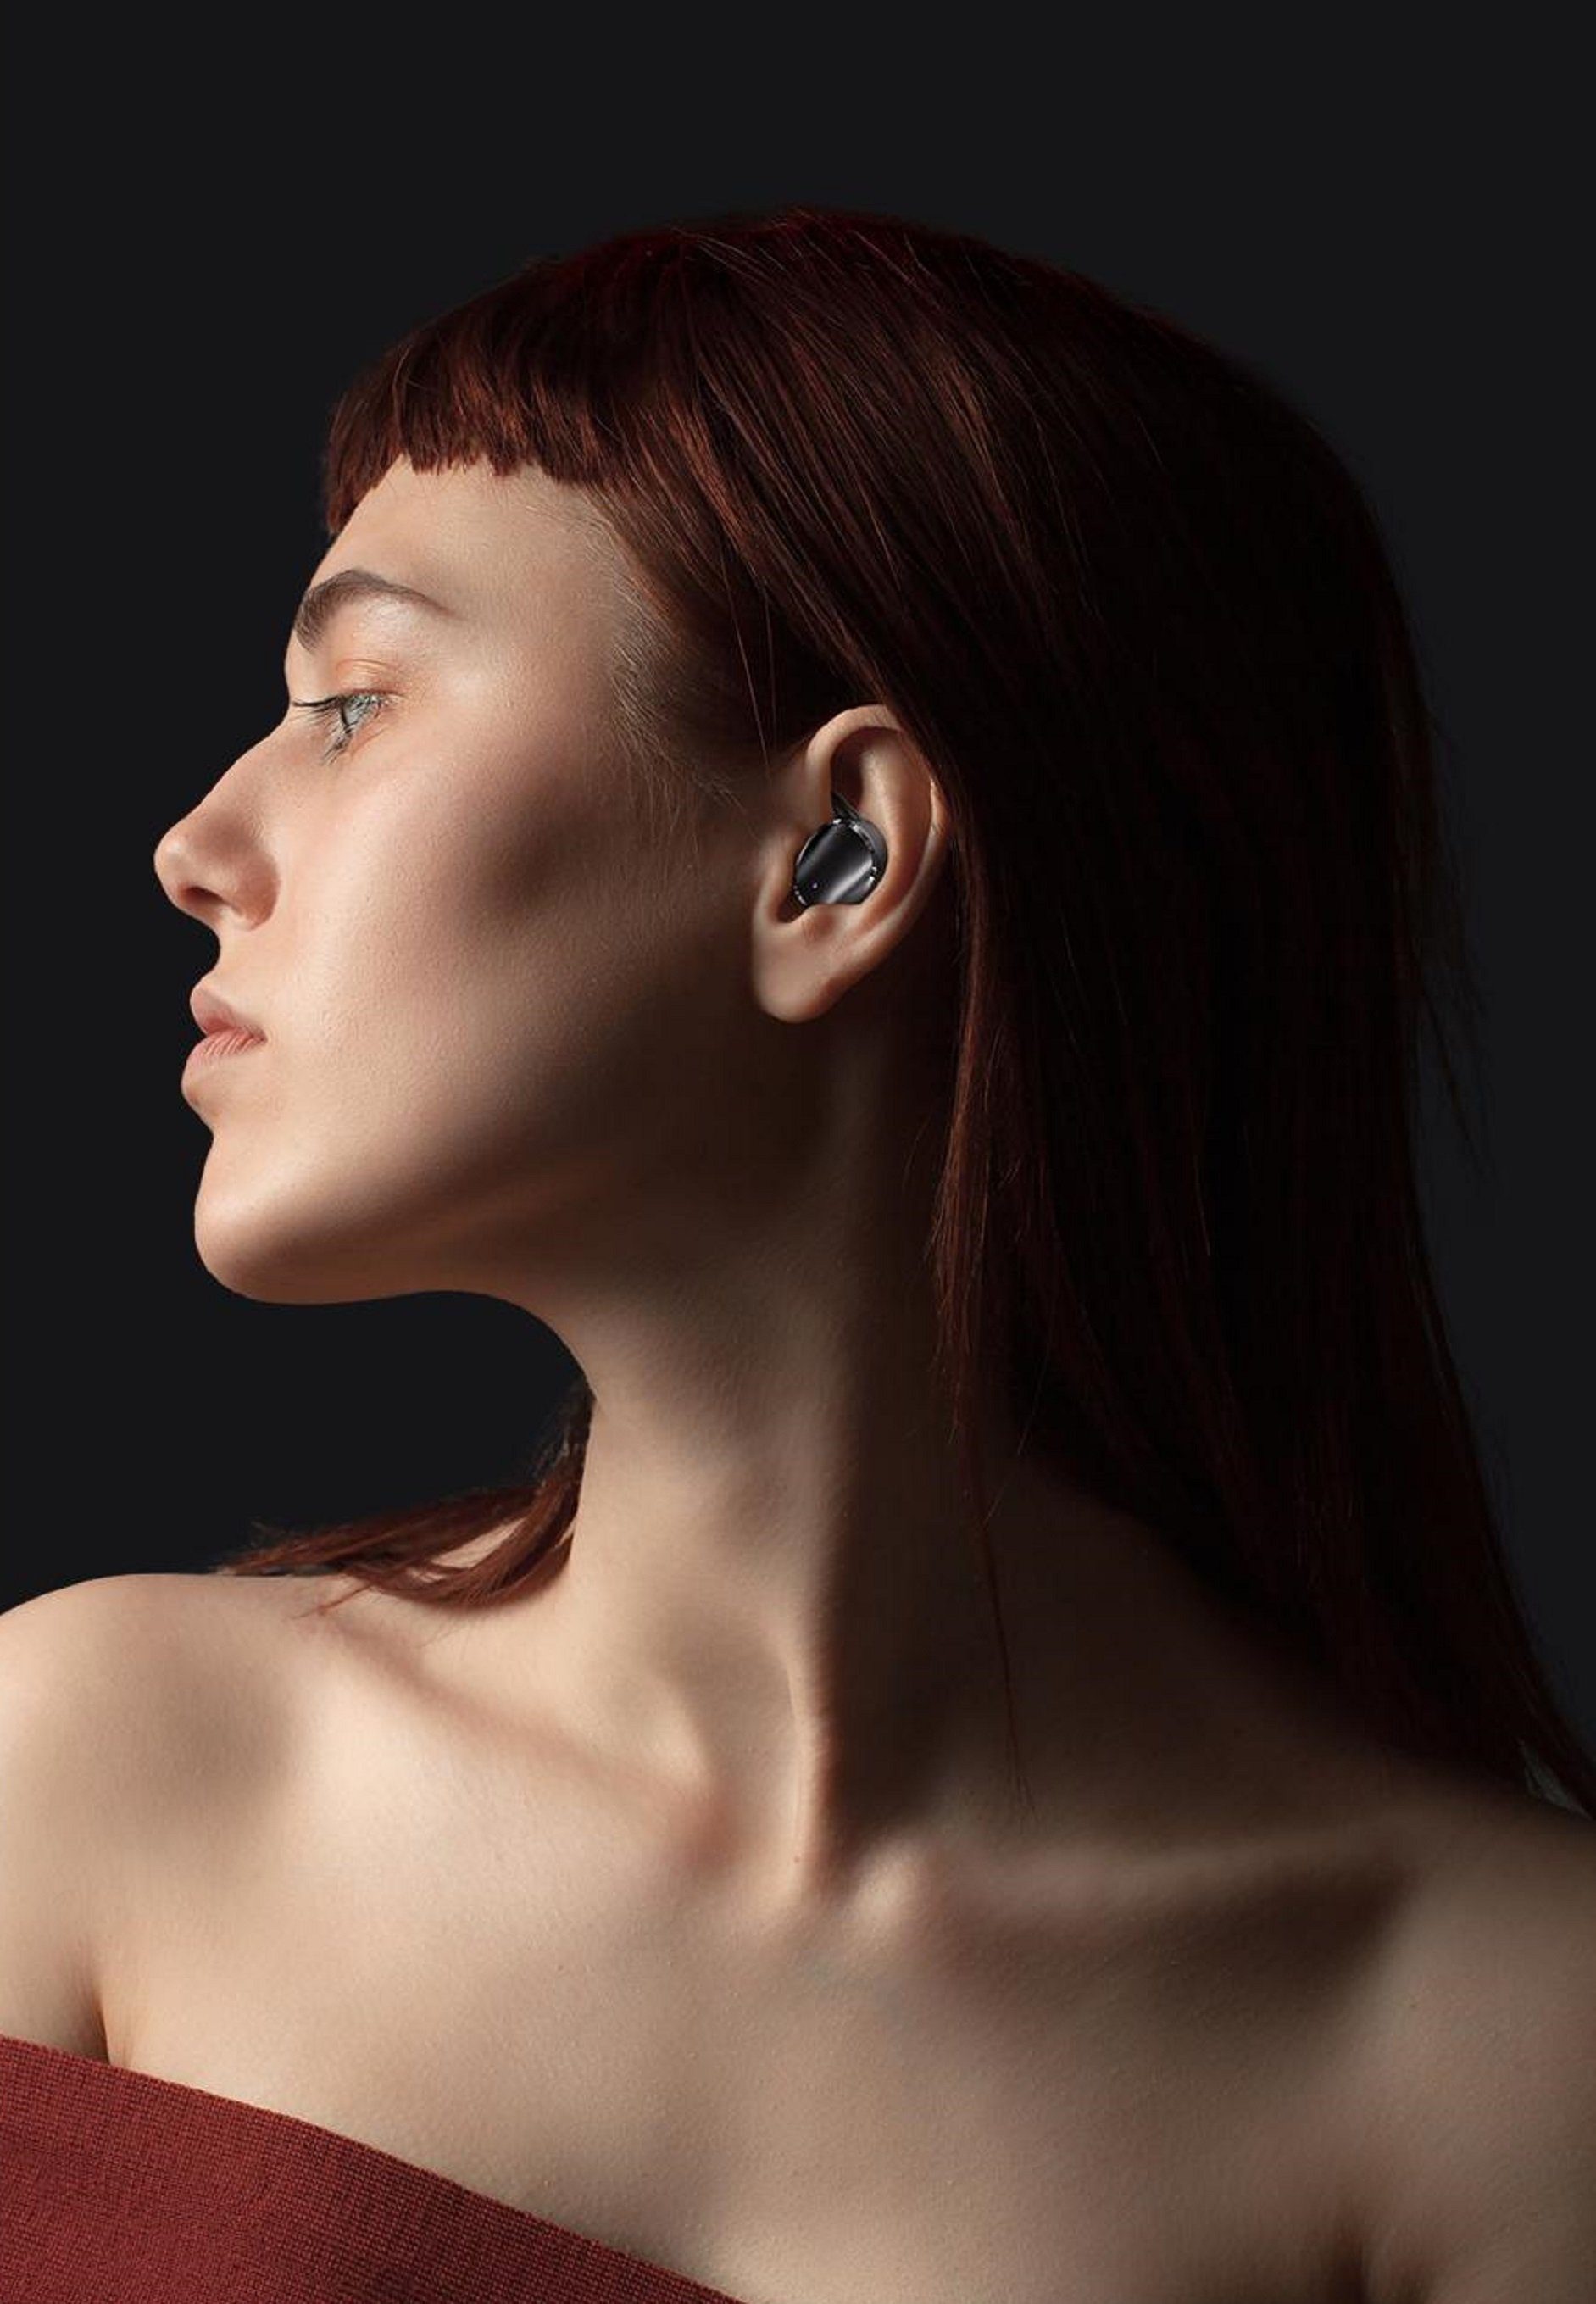 Blueltooth, Kabellose für USAMS iPhone Wireless Bluetooth Control, In-Ear LG Huawei Sport, Touch Sport usw) Fitness Samsung Bluetooth-Kopfhörer (Bluetooth, Kopfhörer Smartphone Headset